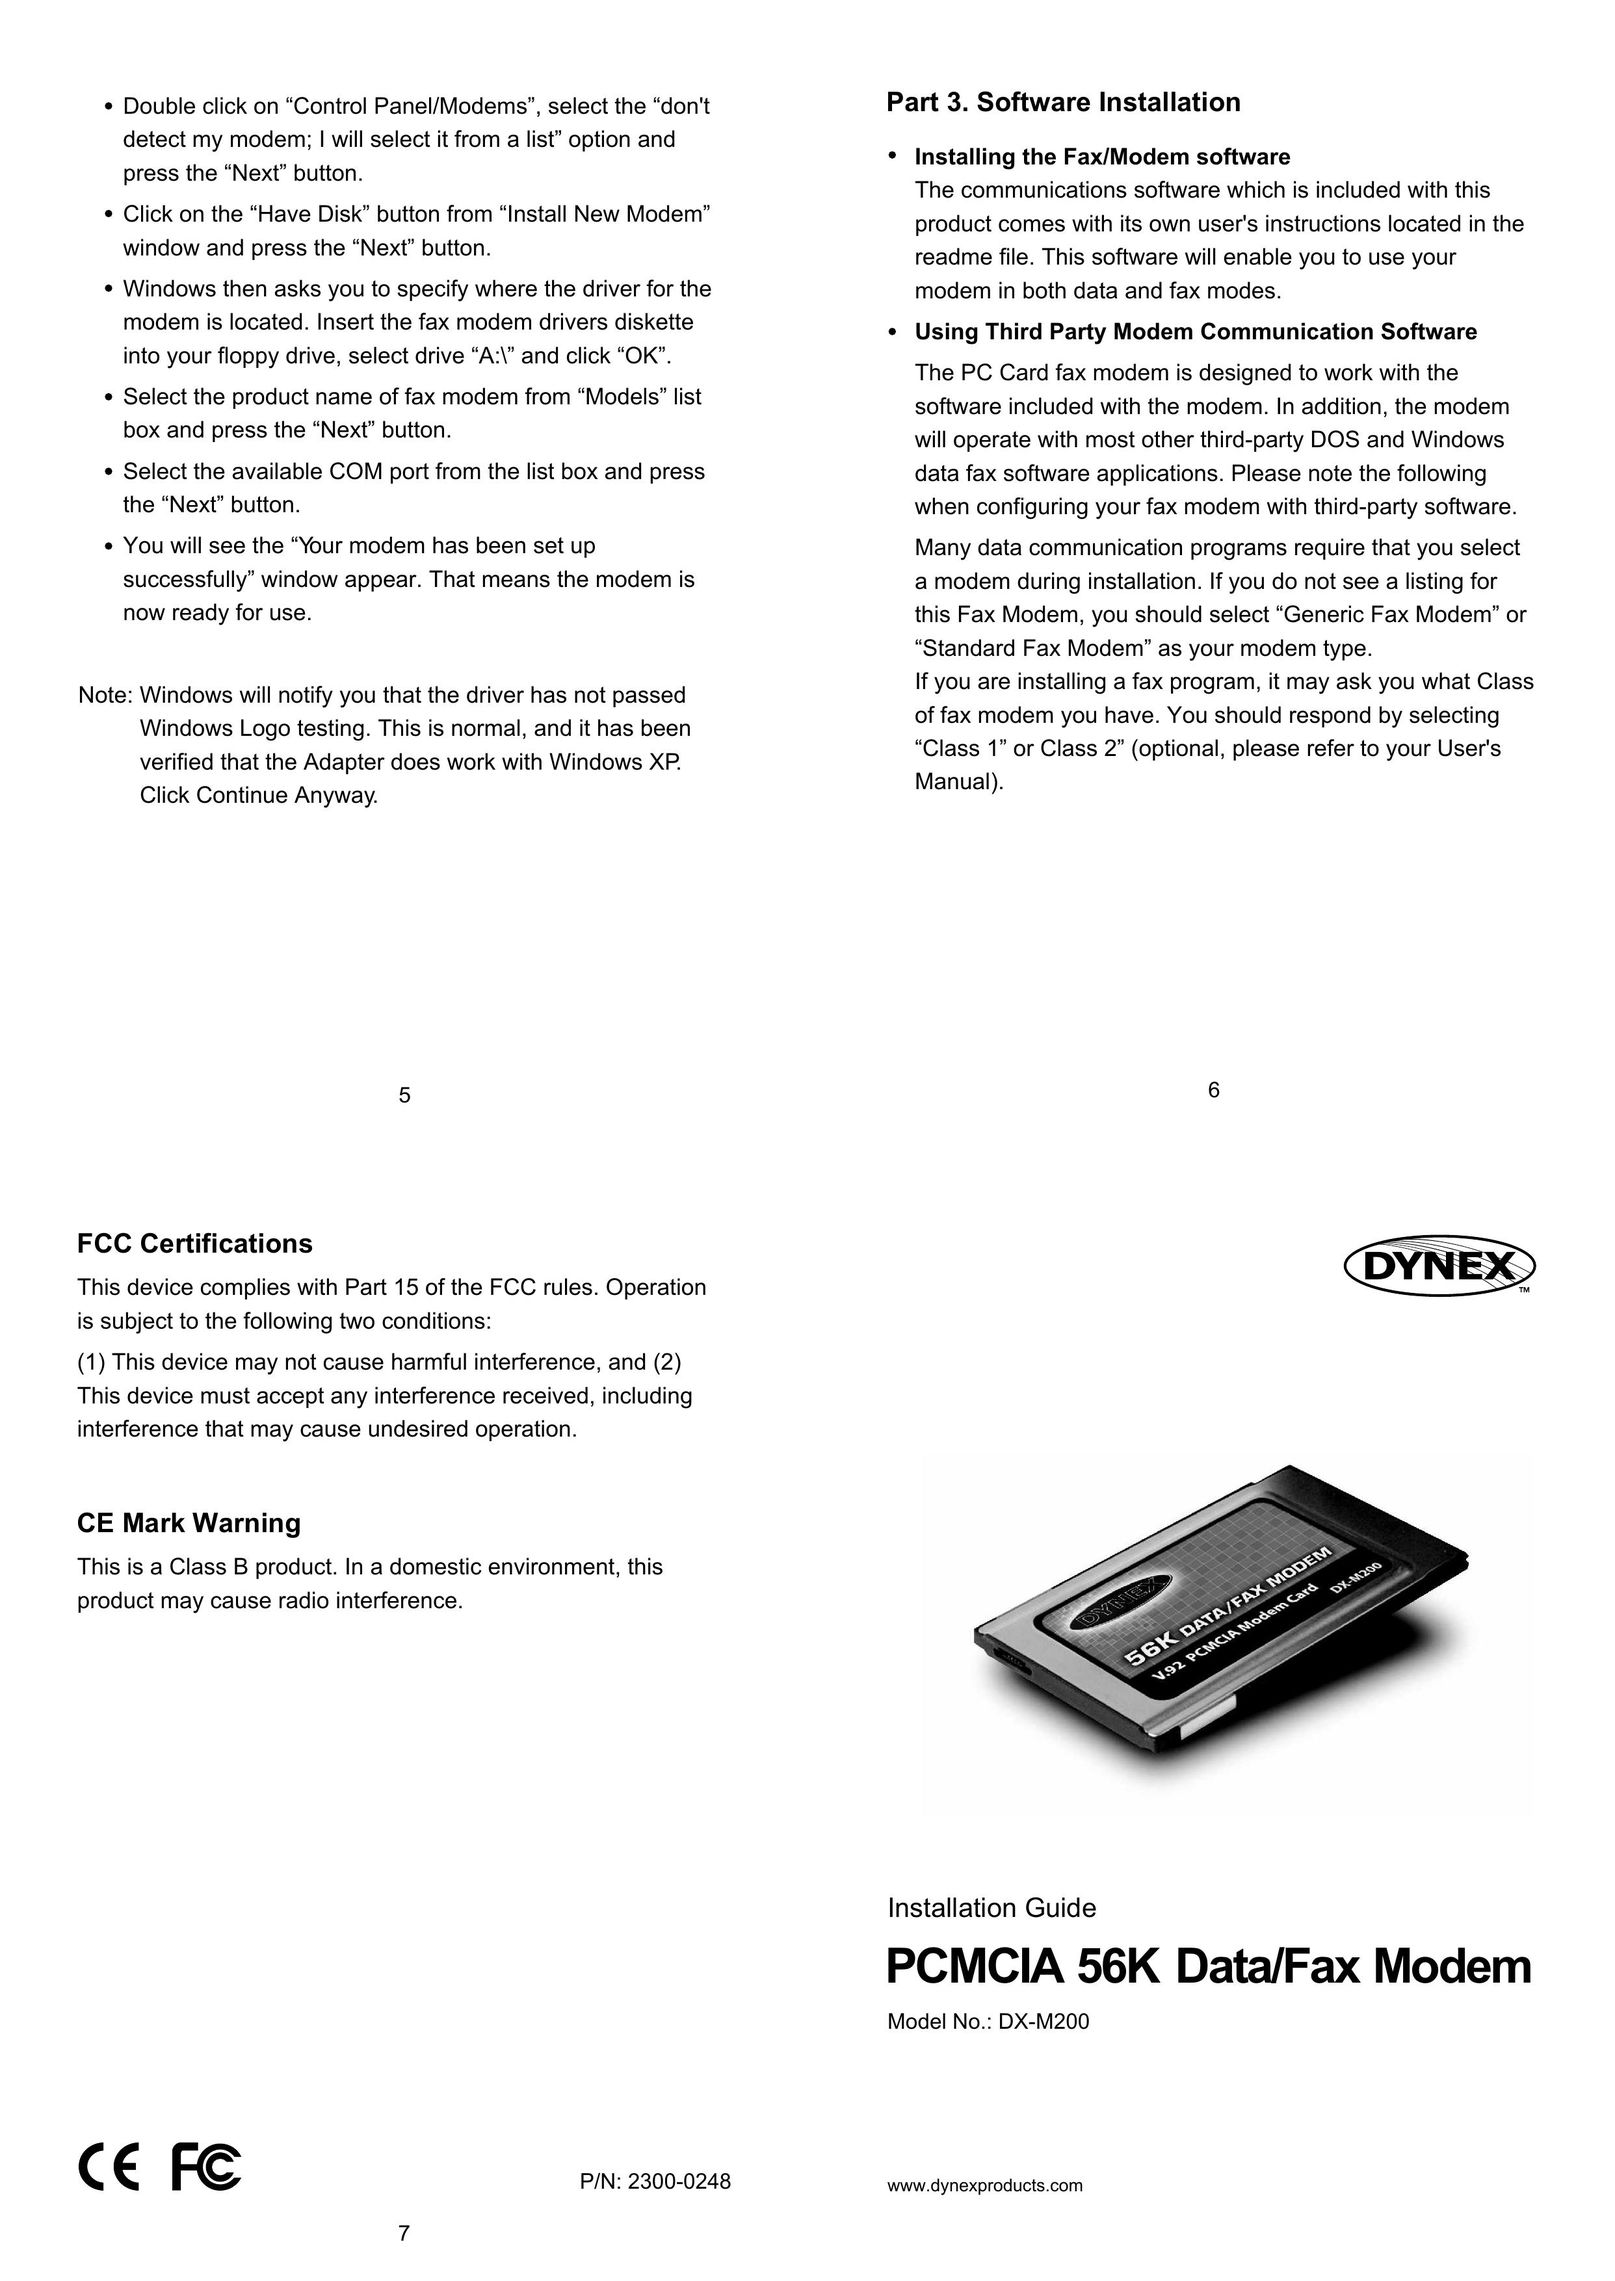 Dynex DX-M200 Modem User Manual